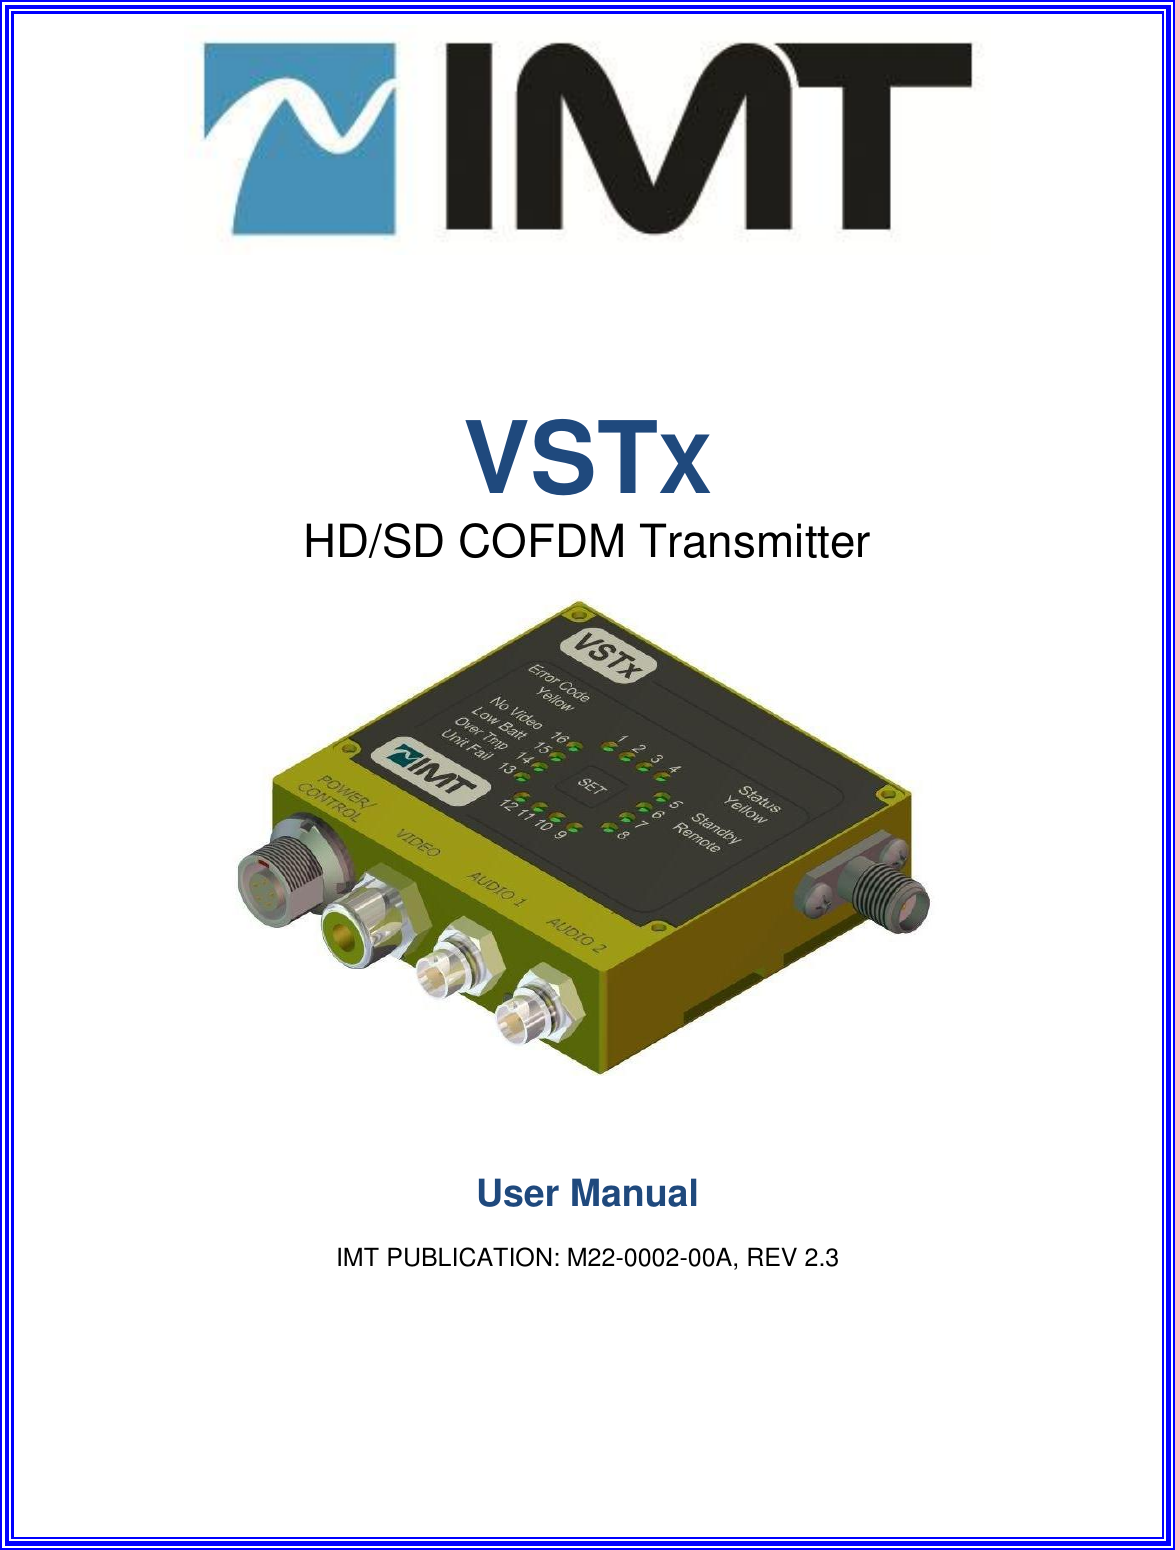        VSTX HD/SD COFDM Transmitter       User Manual  IMT PUBLICATION: M22-0002-00A, REV 2.3        